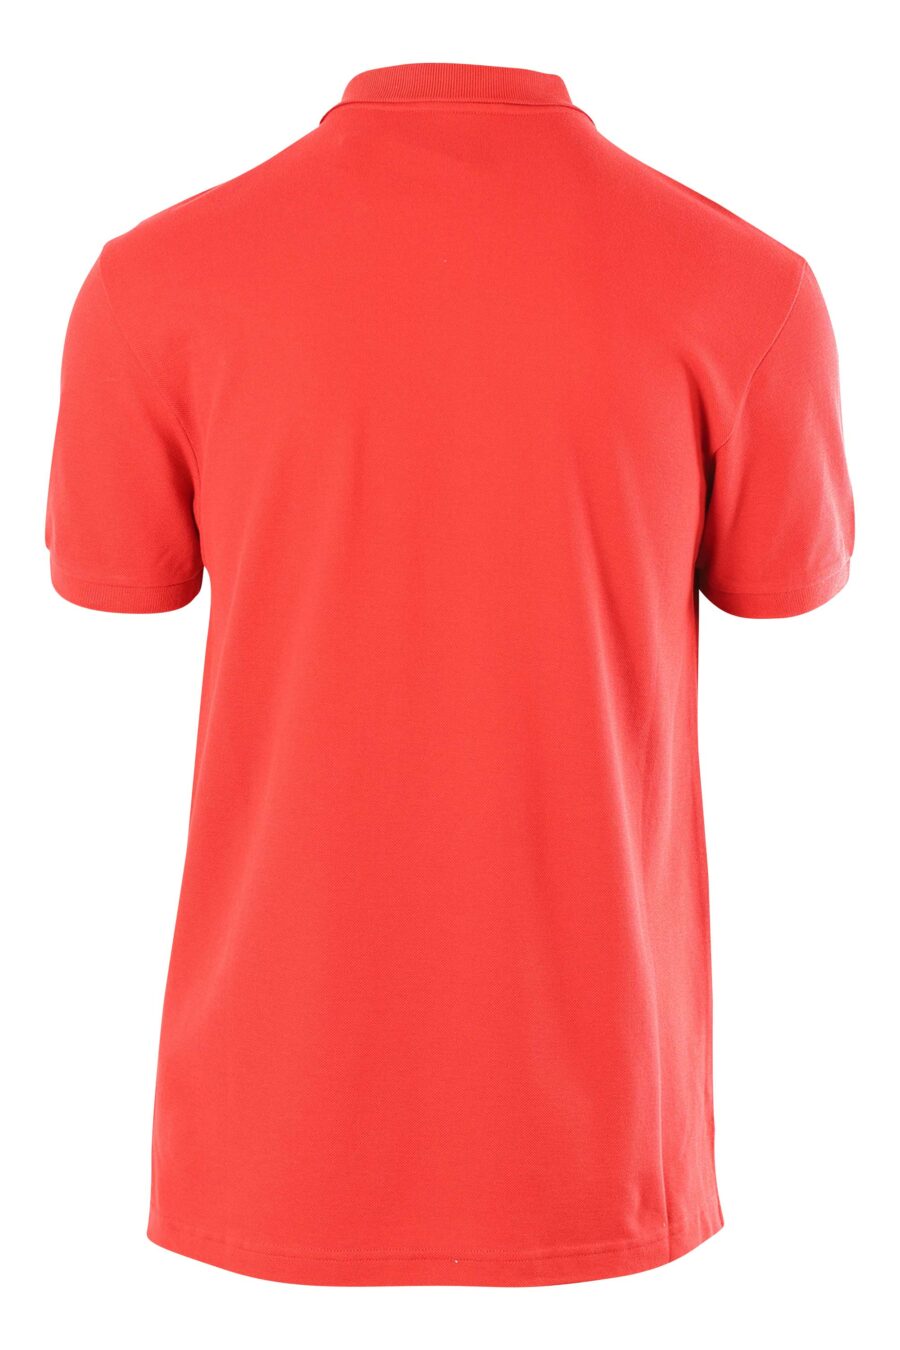 Red polo shirt with mini-logo "milano" - 889316176728 2